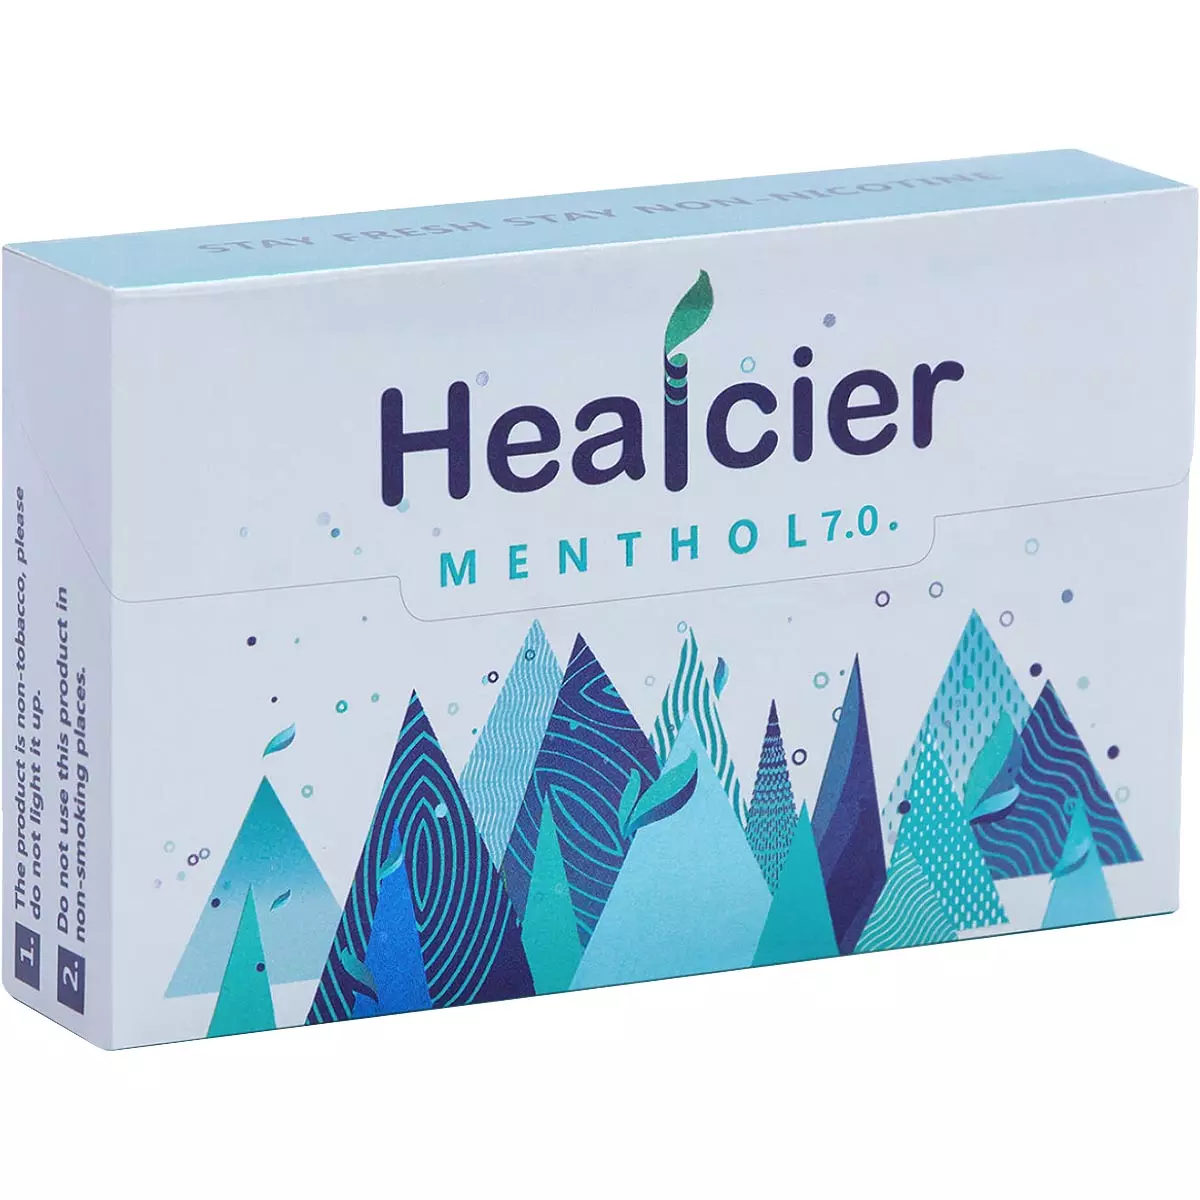 Healcier - Menthol 7.0 Non-Nicotine (1 pack)